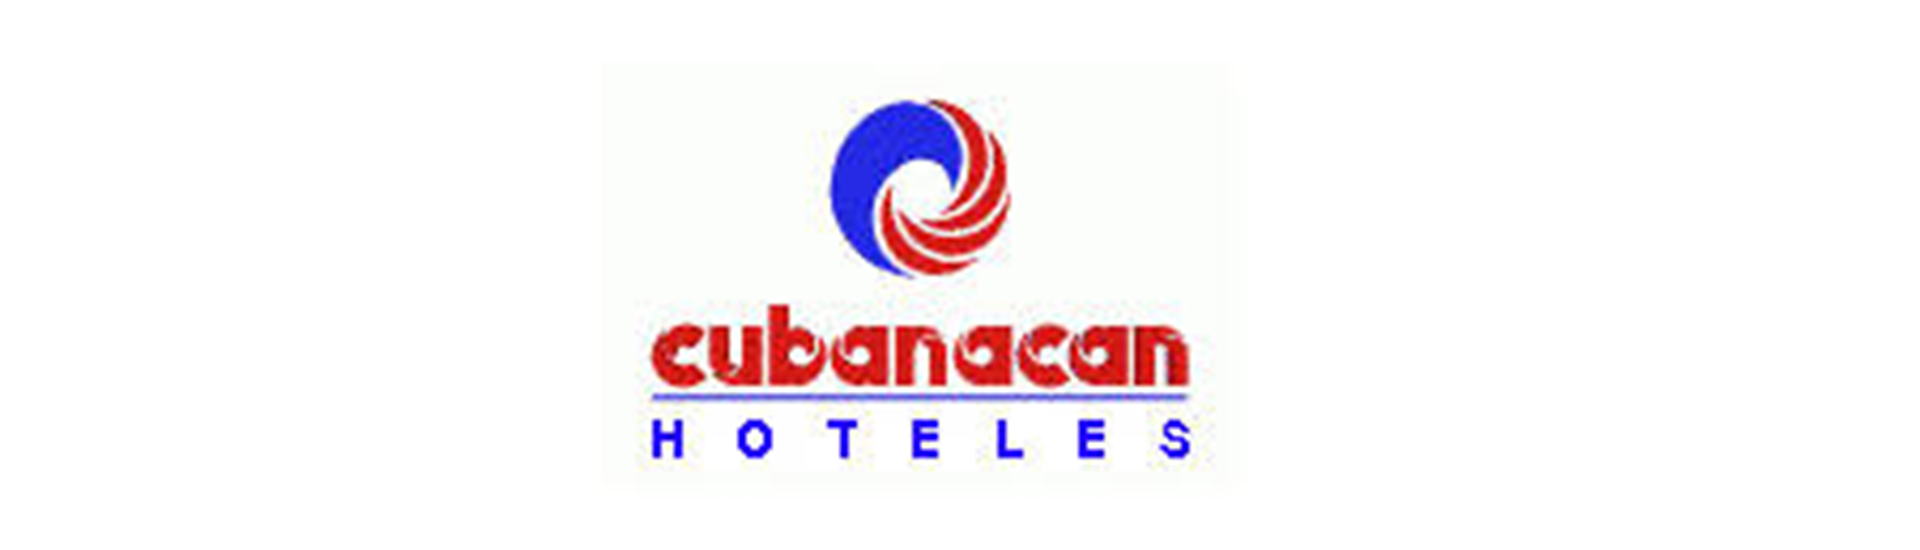 Логотип Отели Cubanacan Cuba